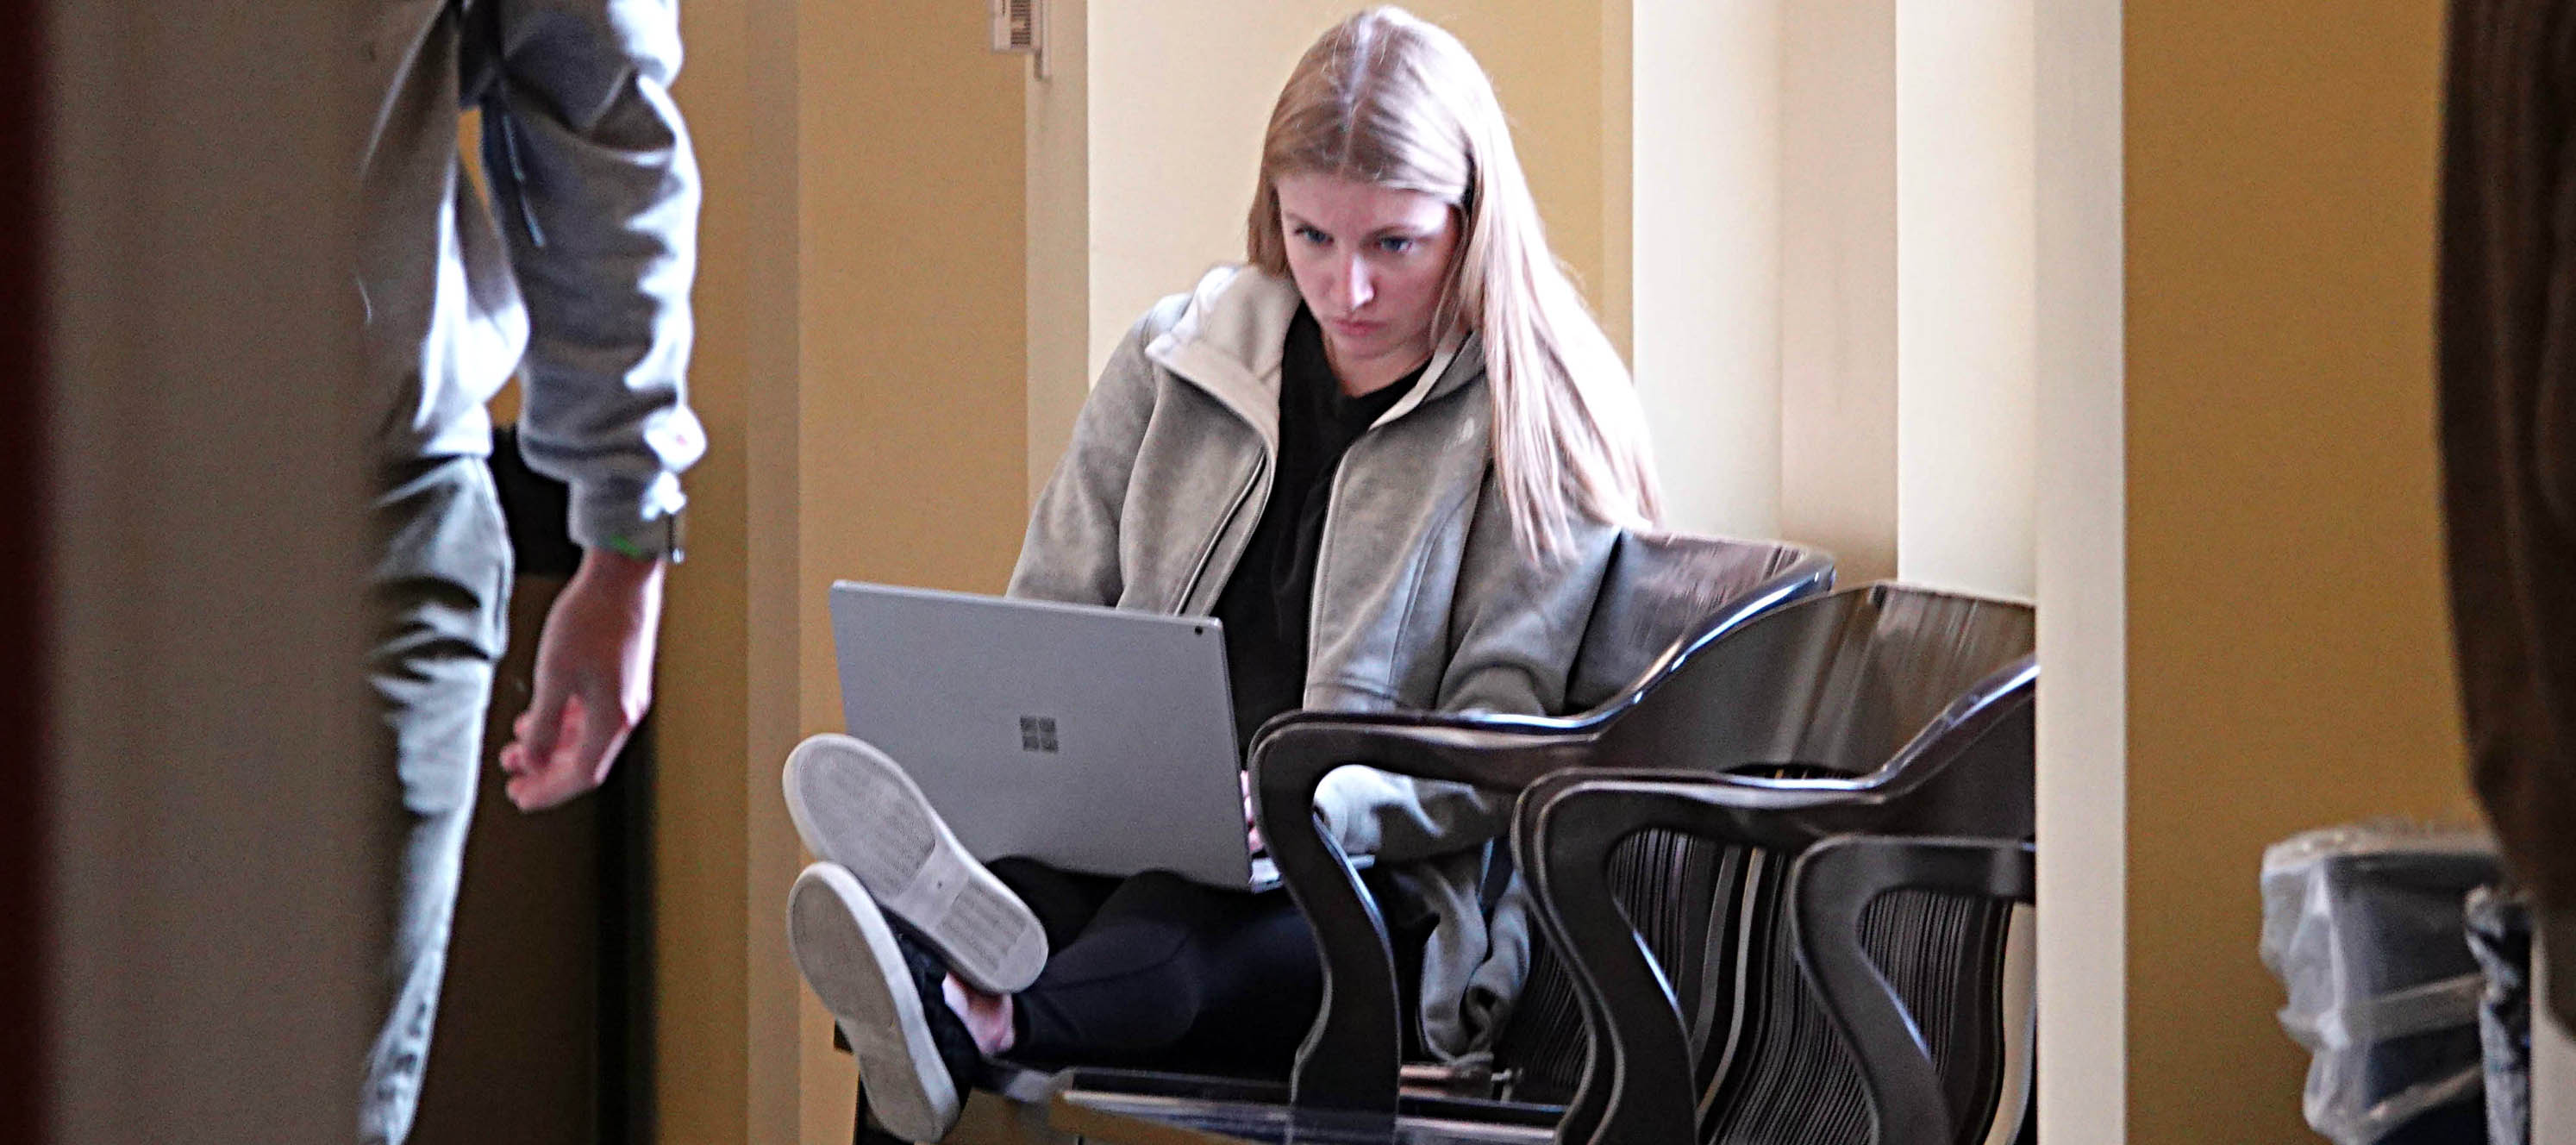  Student using laptop on hallway bench